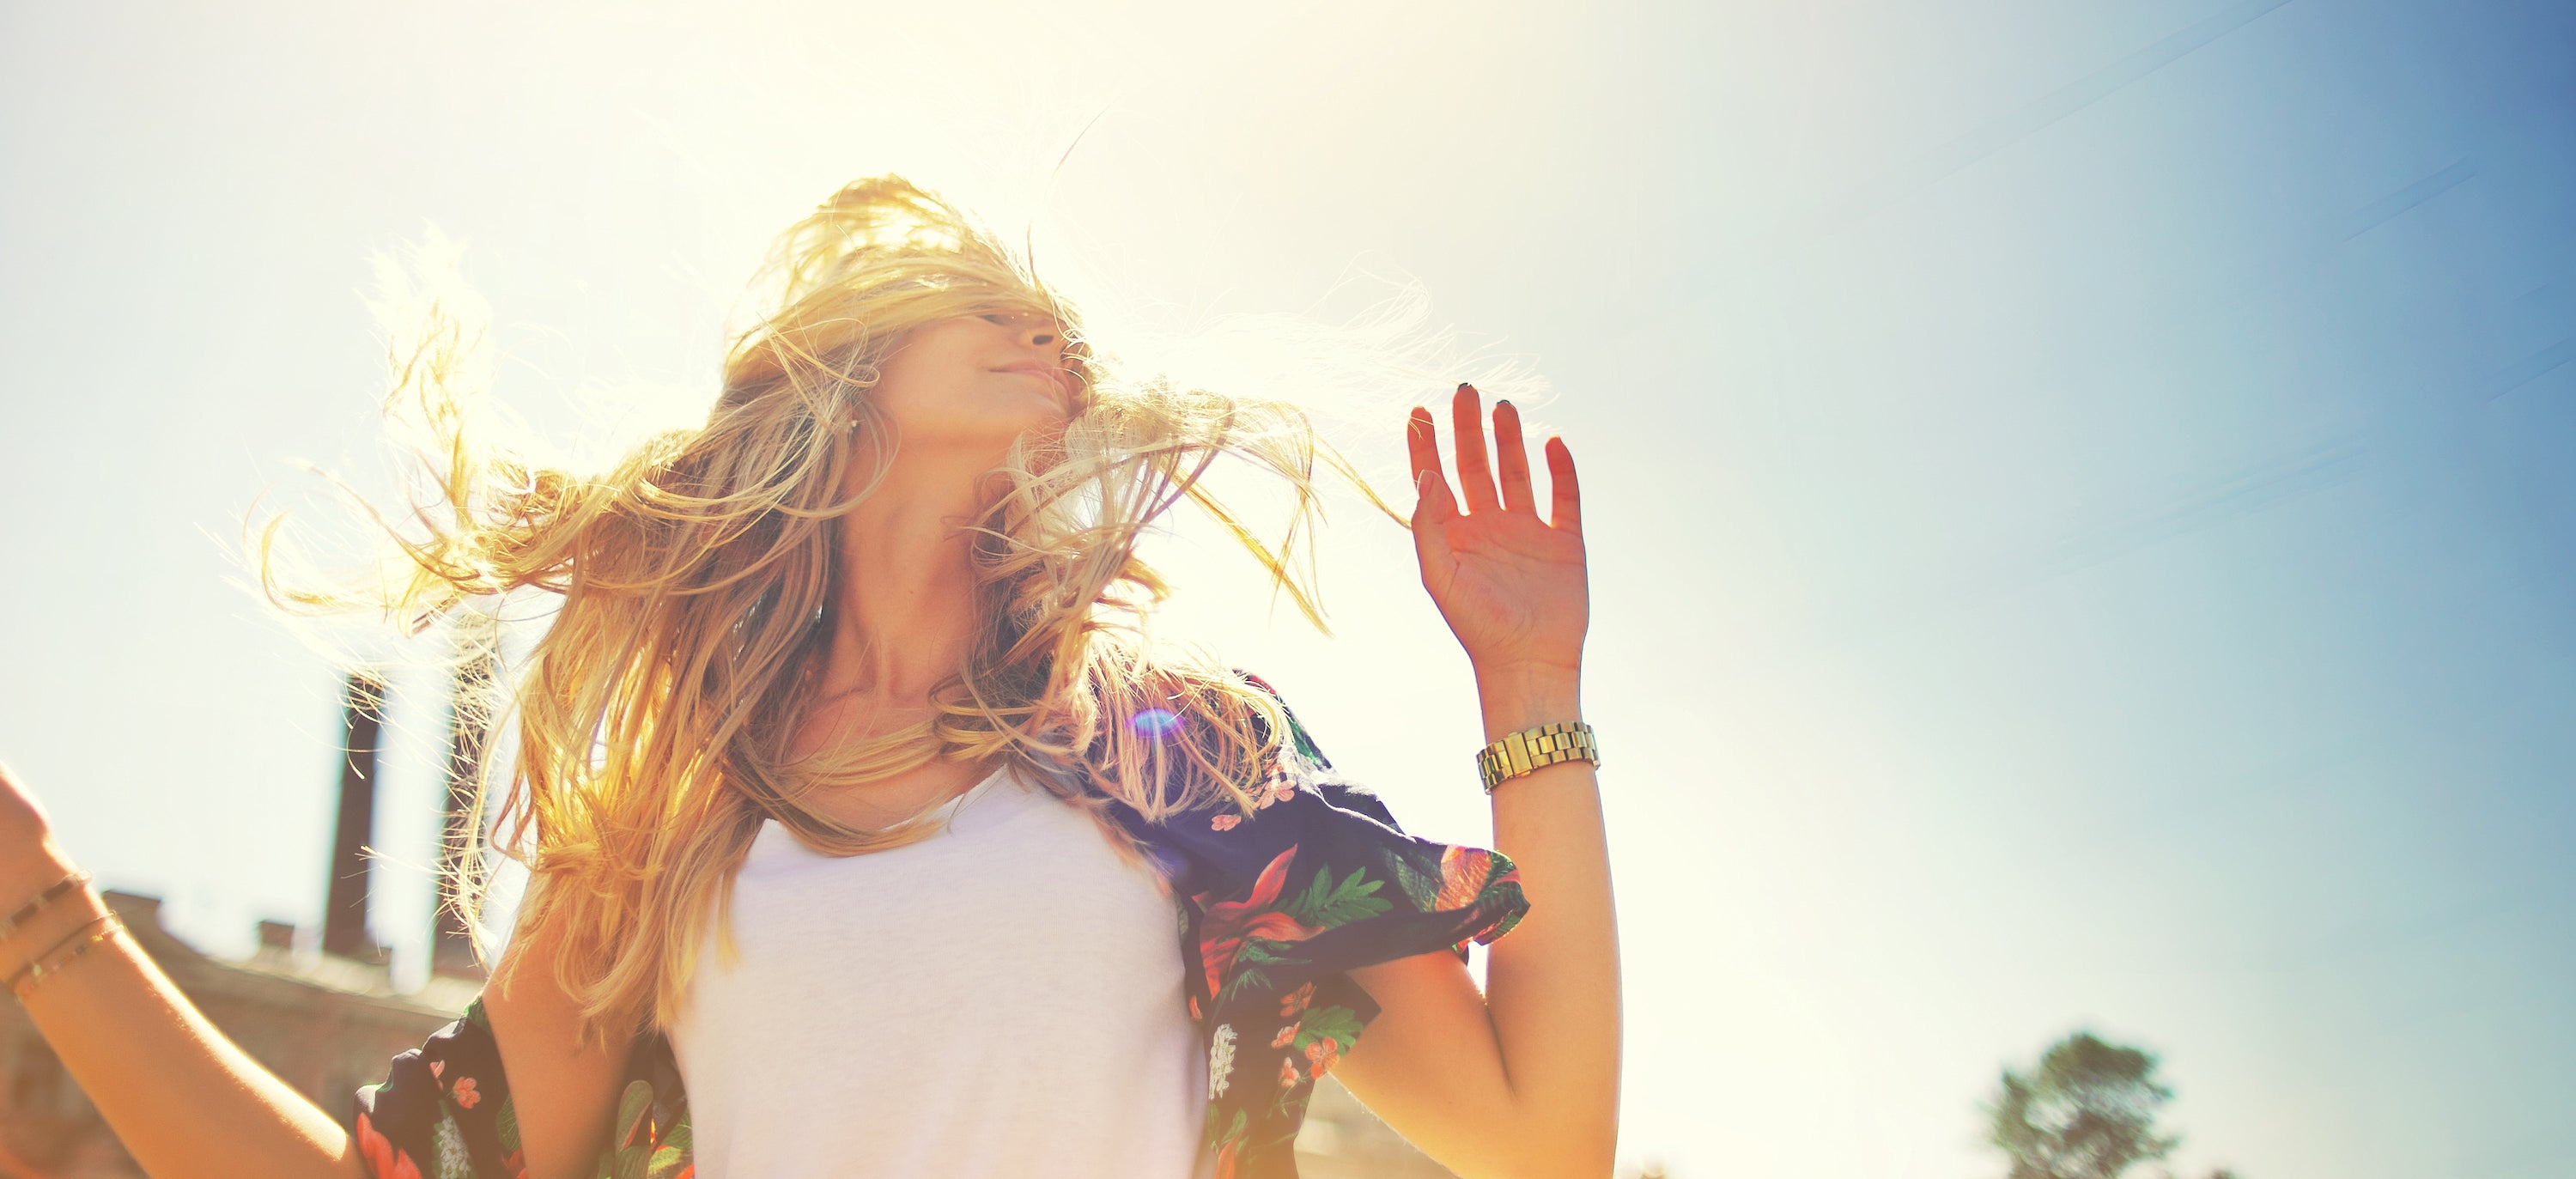 young woman with long blonde hair in white tank enjoying sunshine